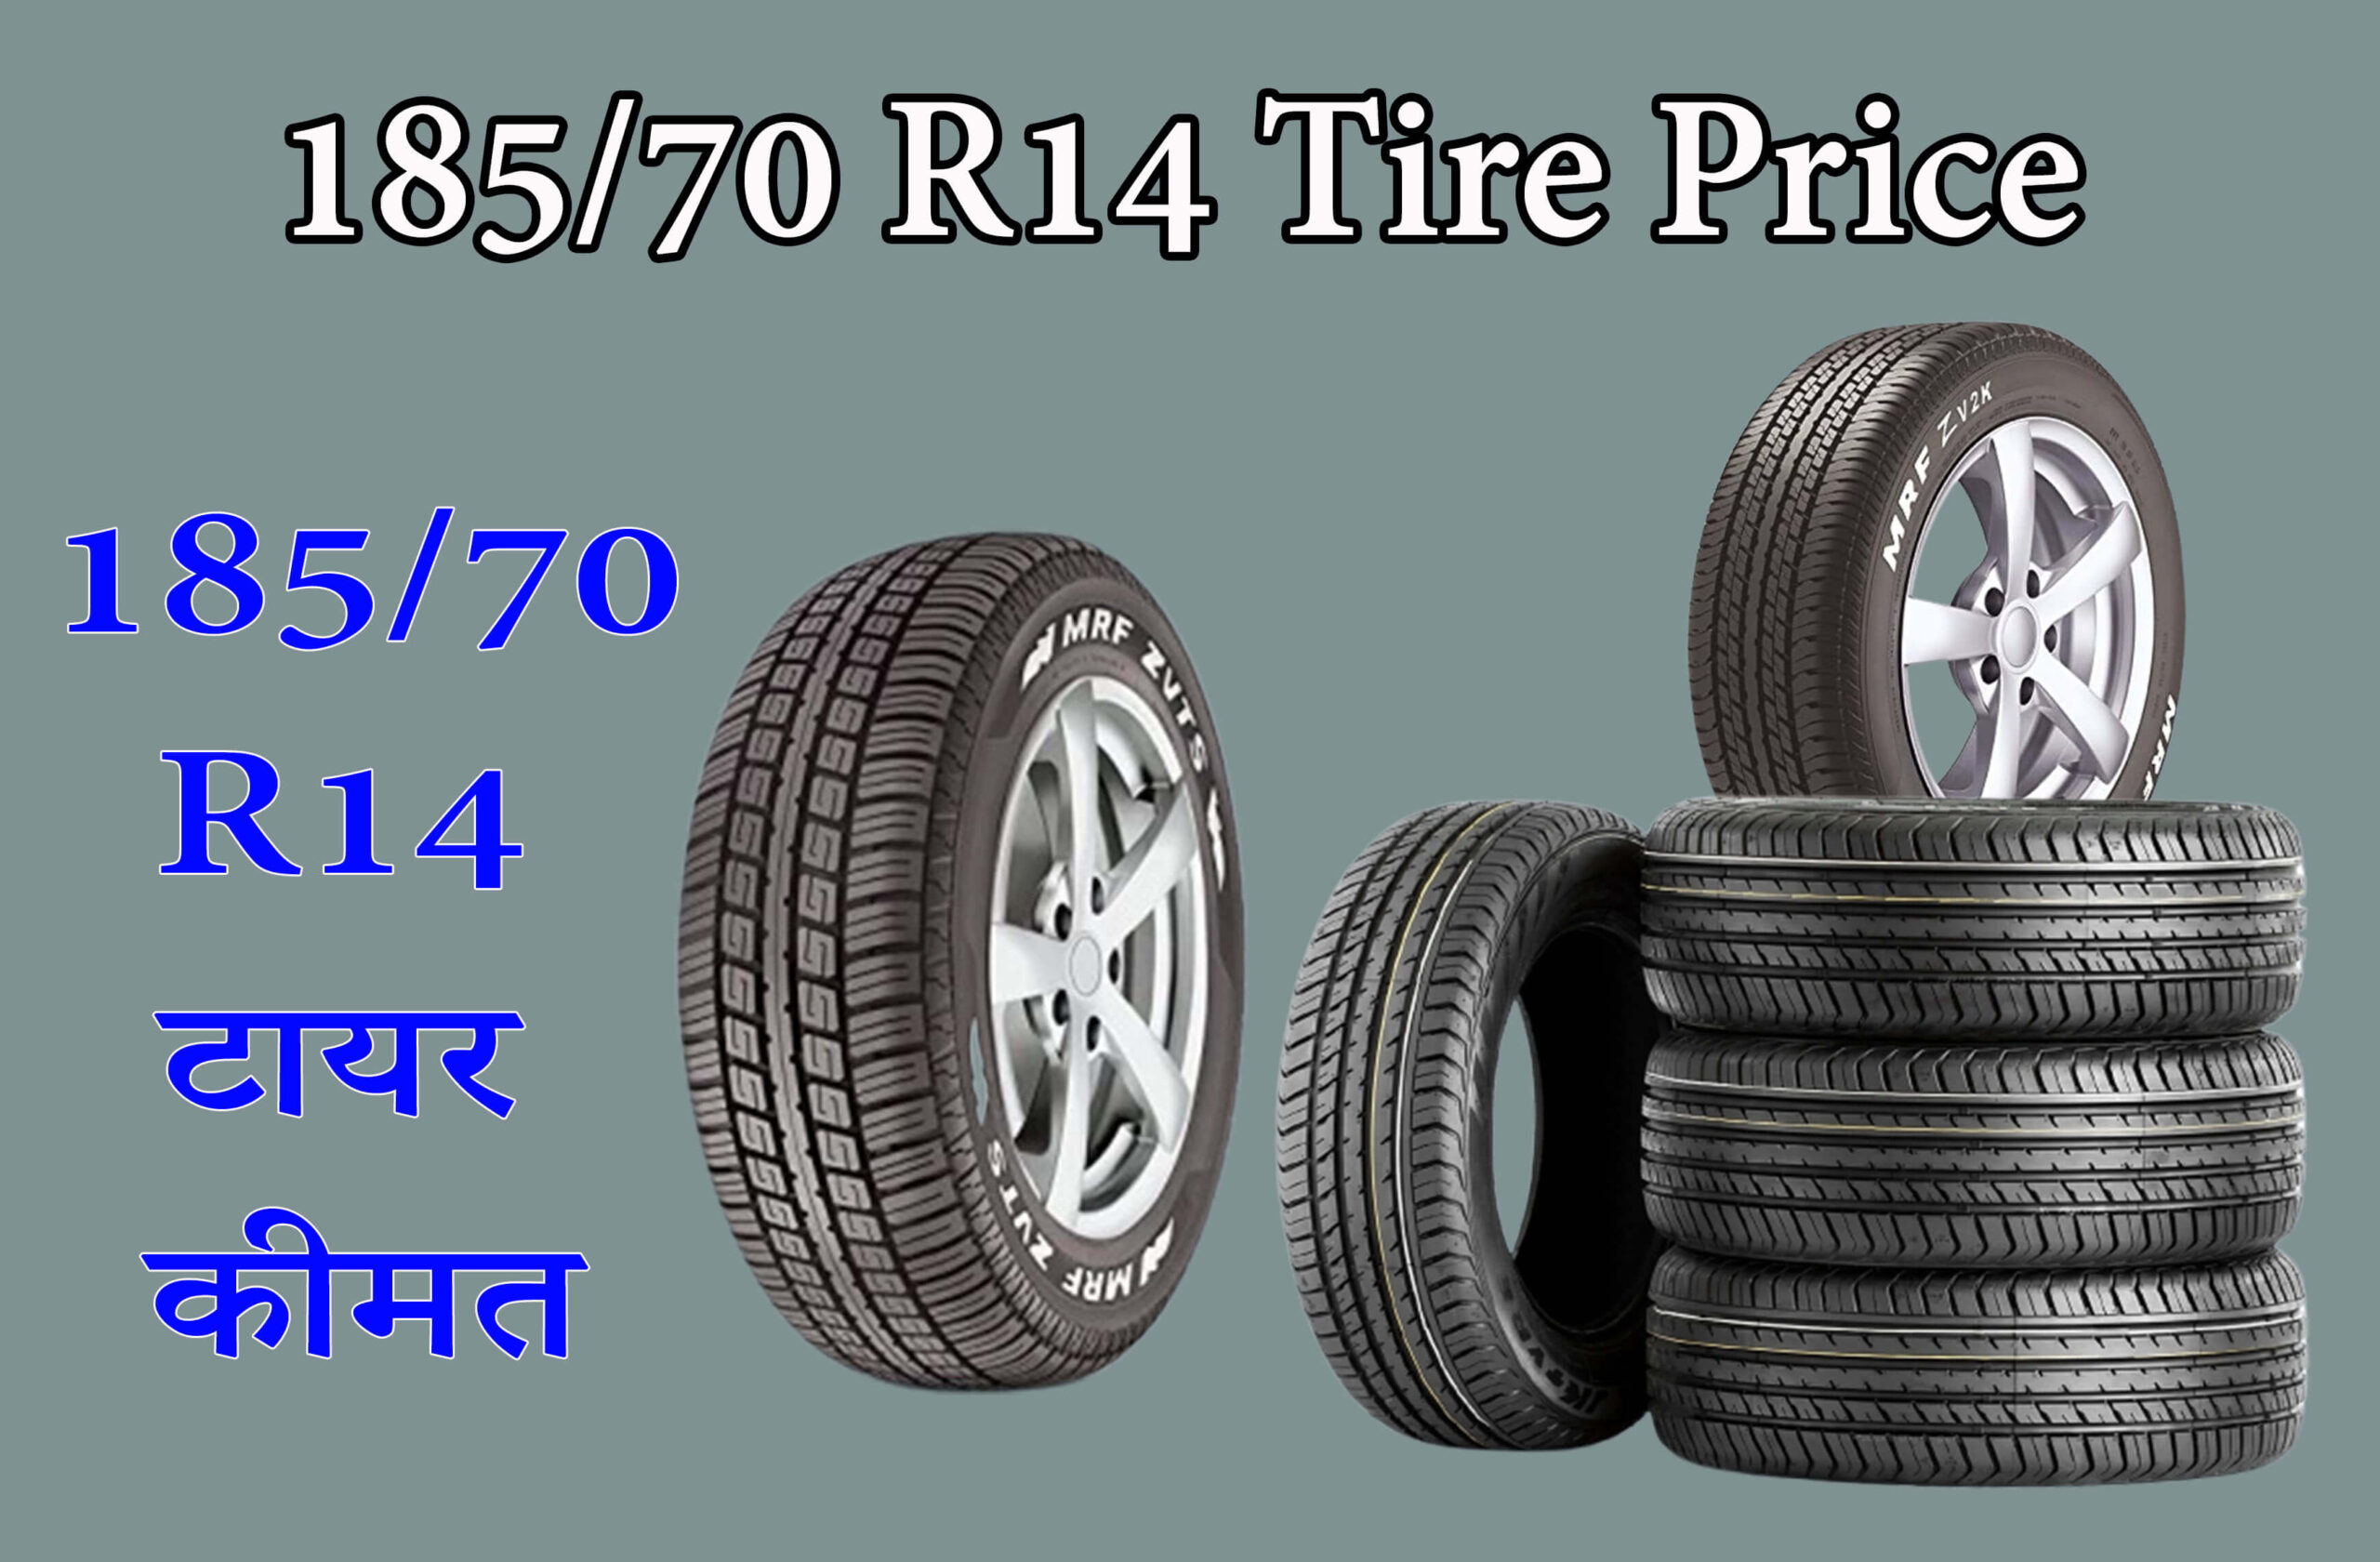 18570 R14 Tire Price